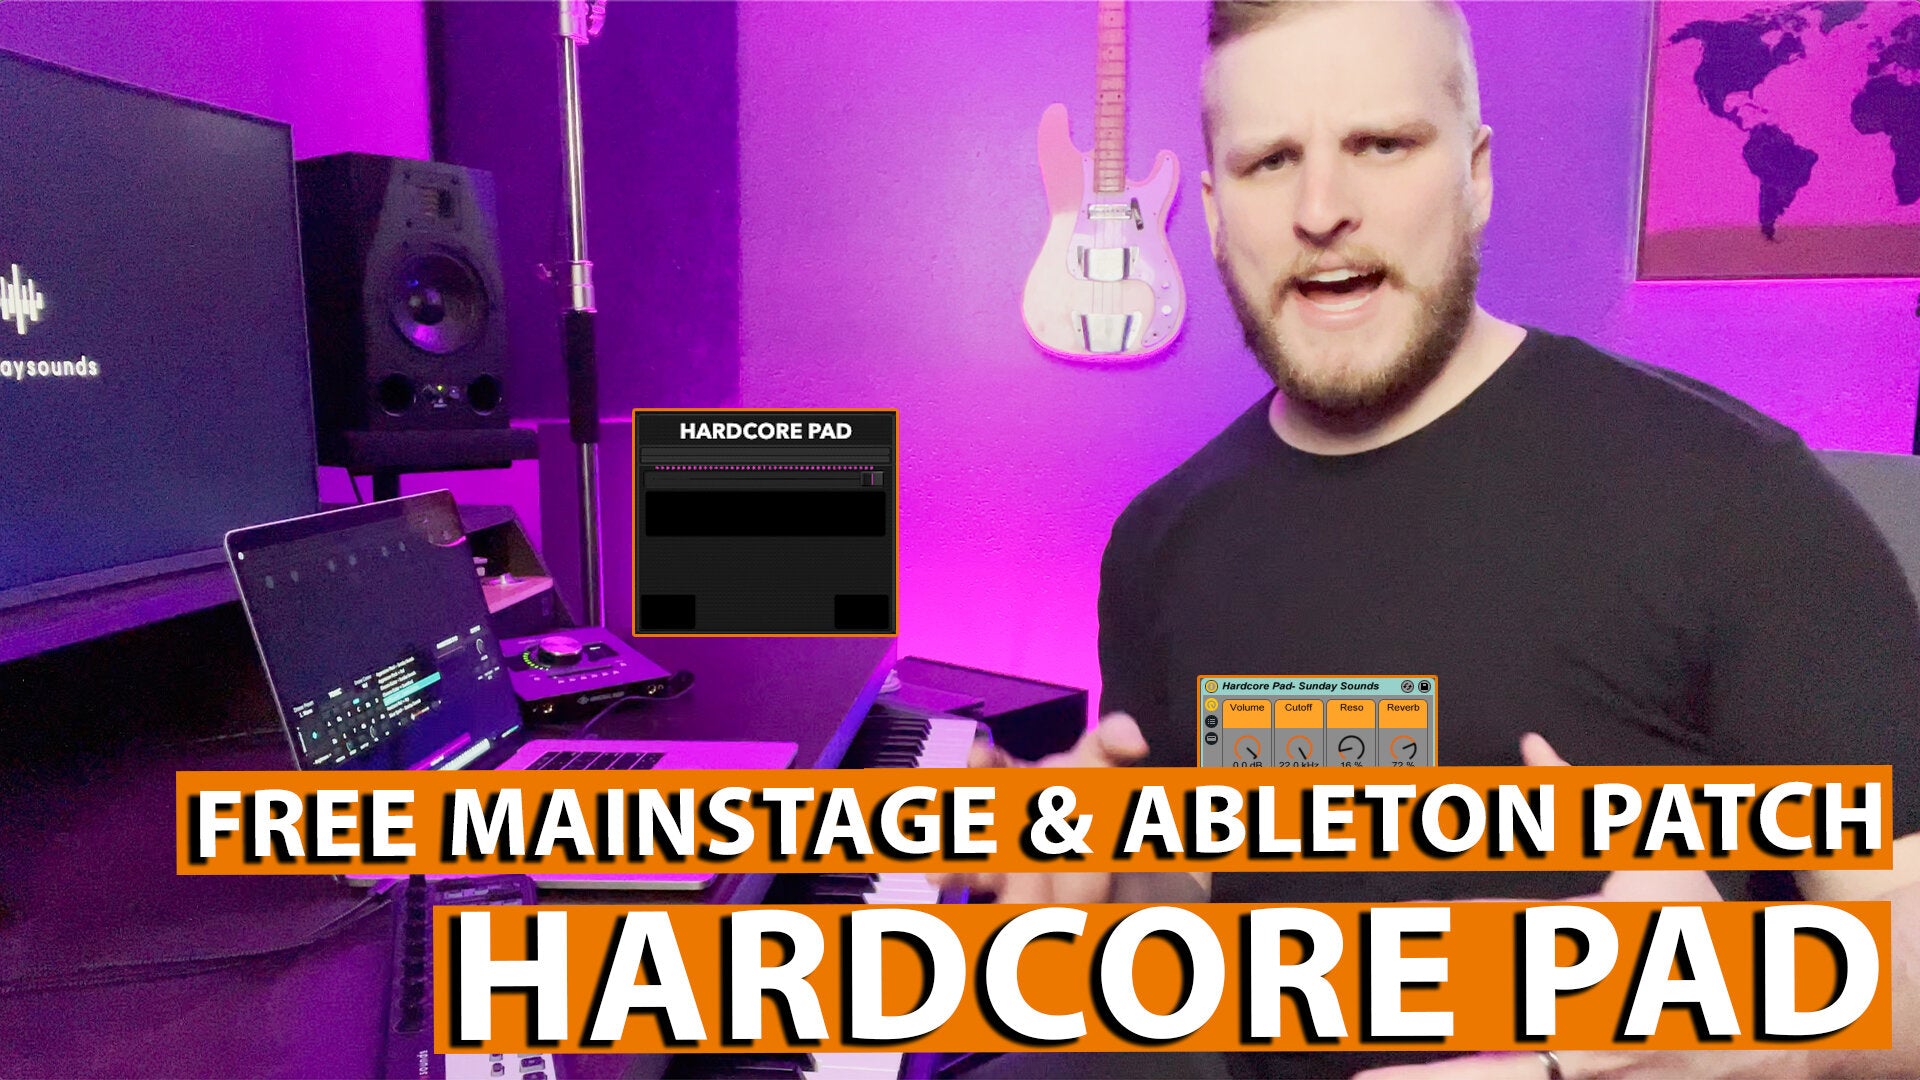 Free MainStage & Ableton Worship Patch! - Hardcore Pad